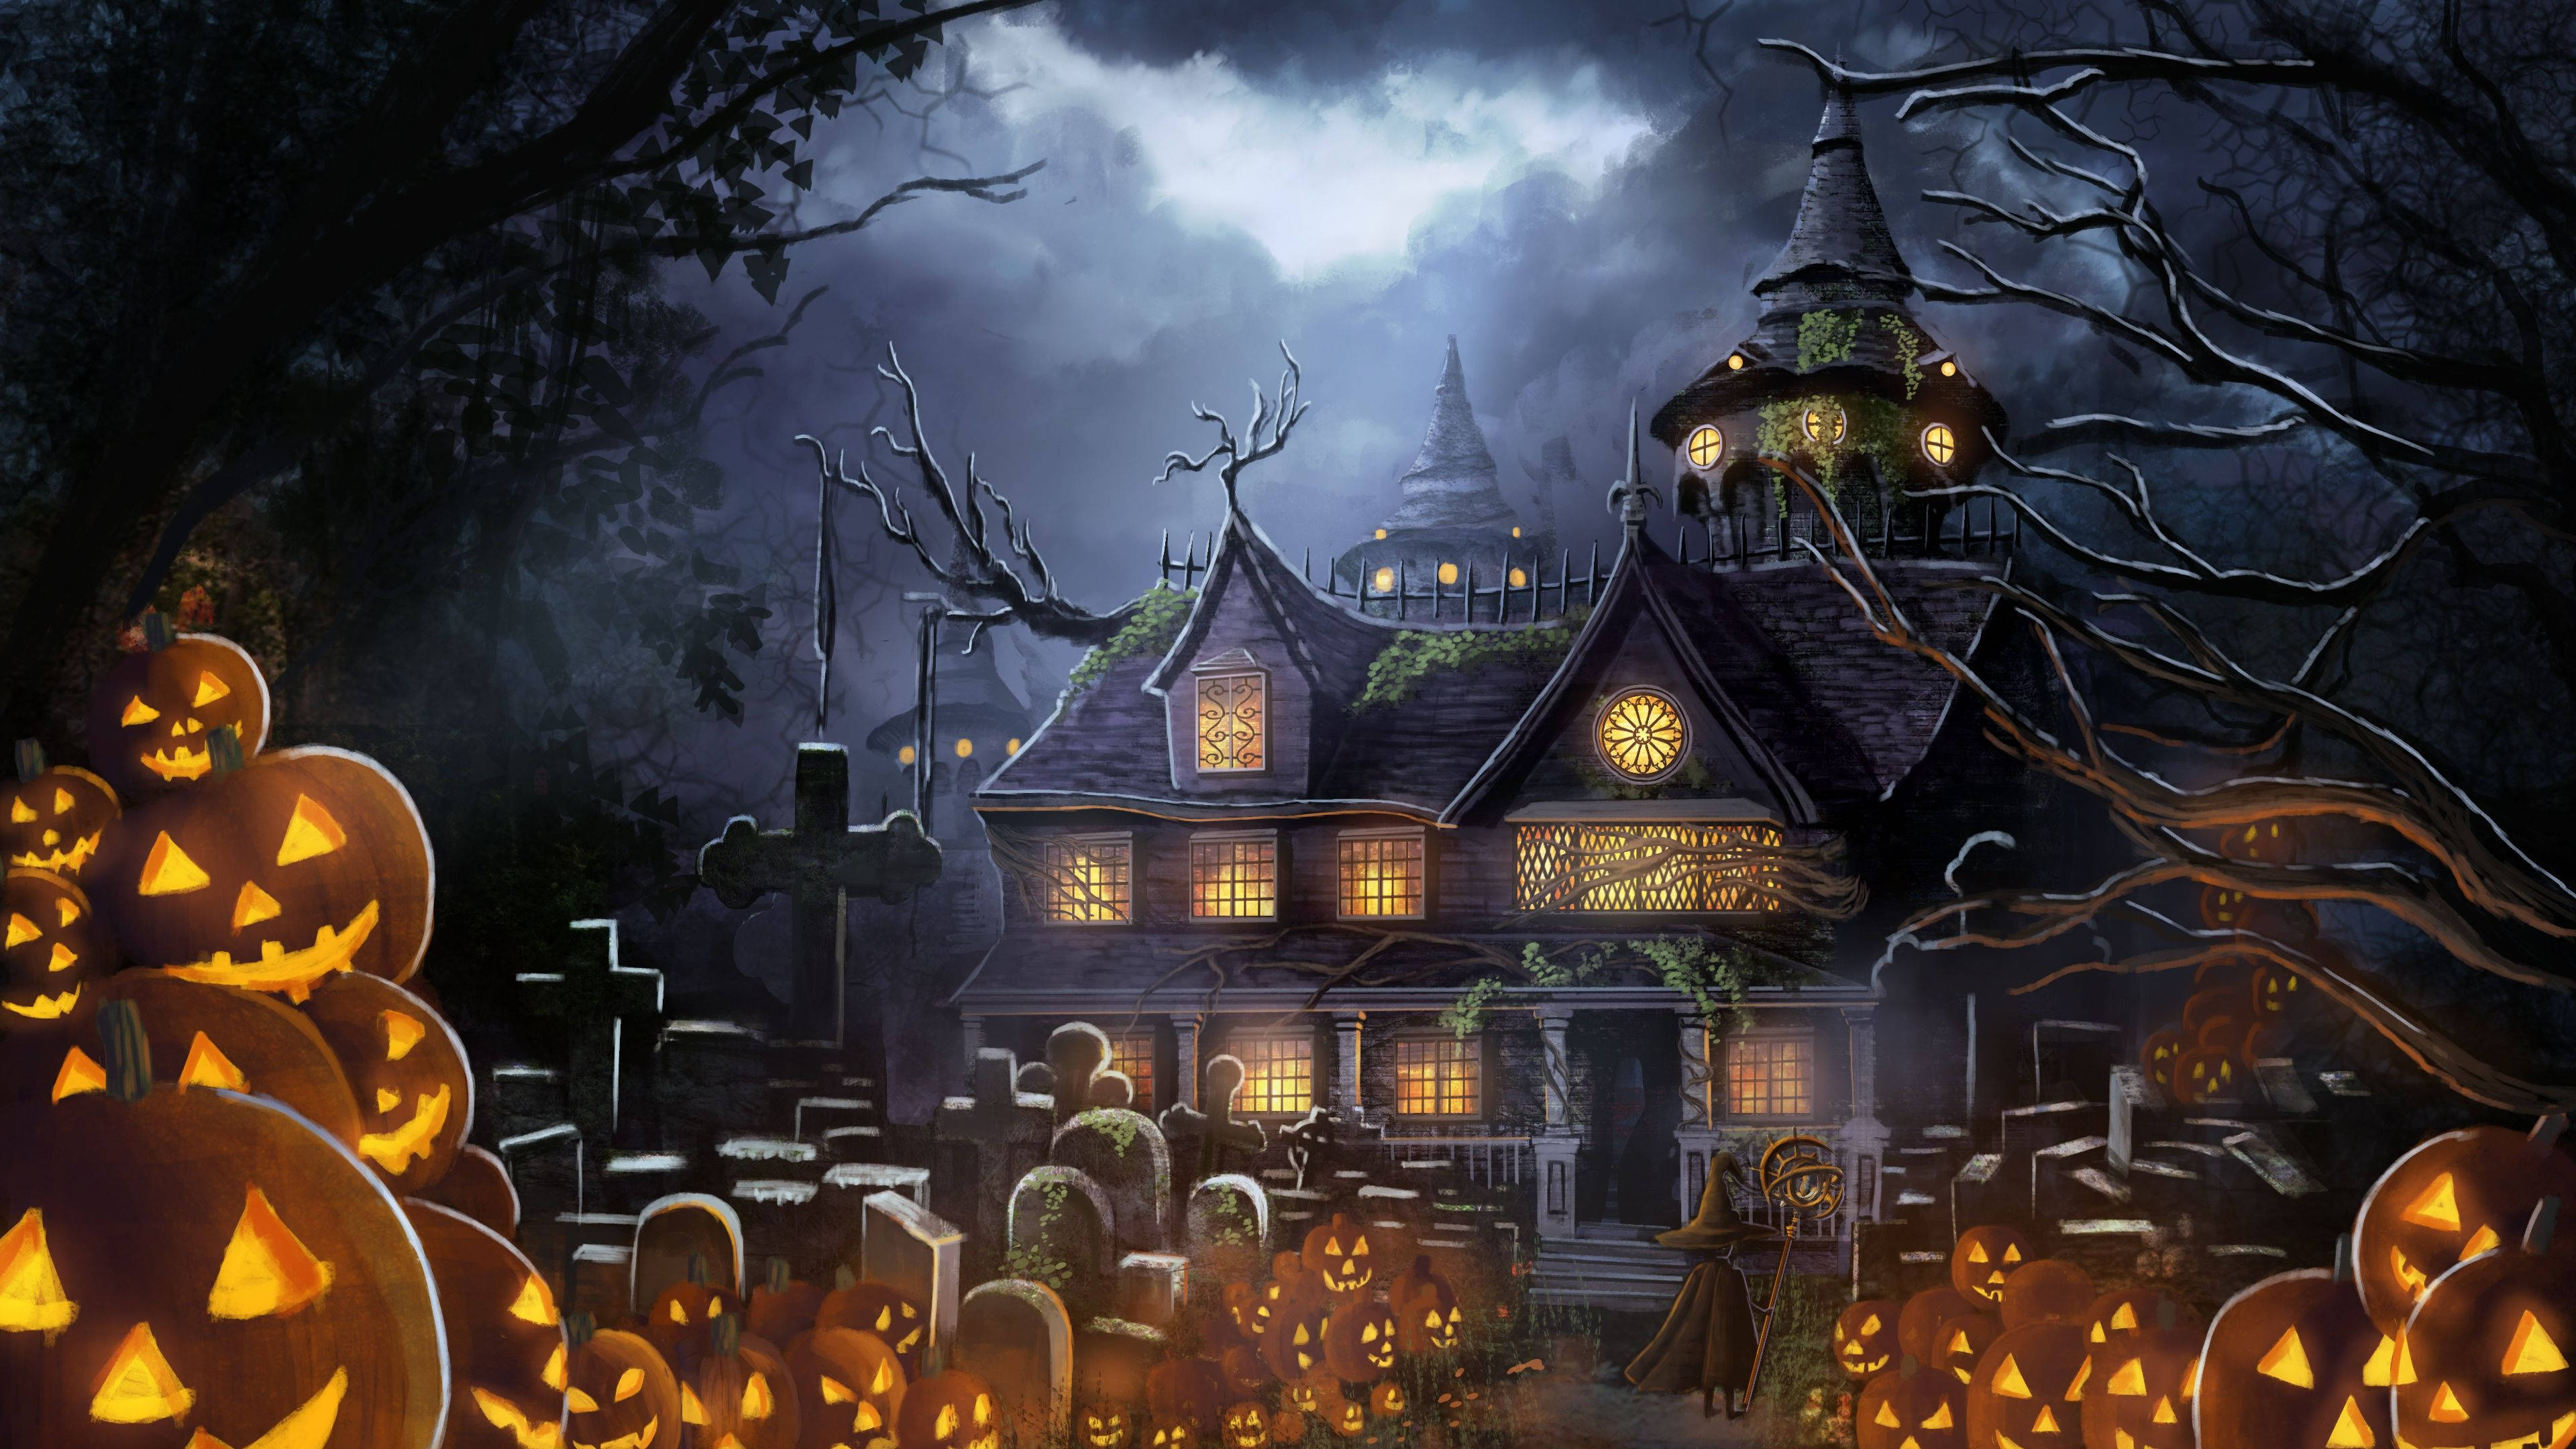 Haunted House and Jack-O’-Lantern Graveyard Wallpaper